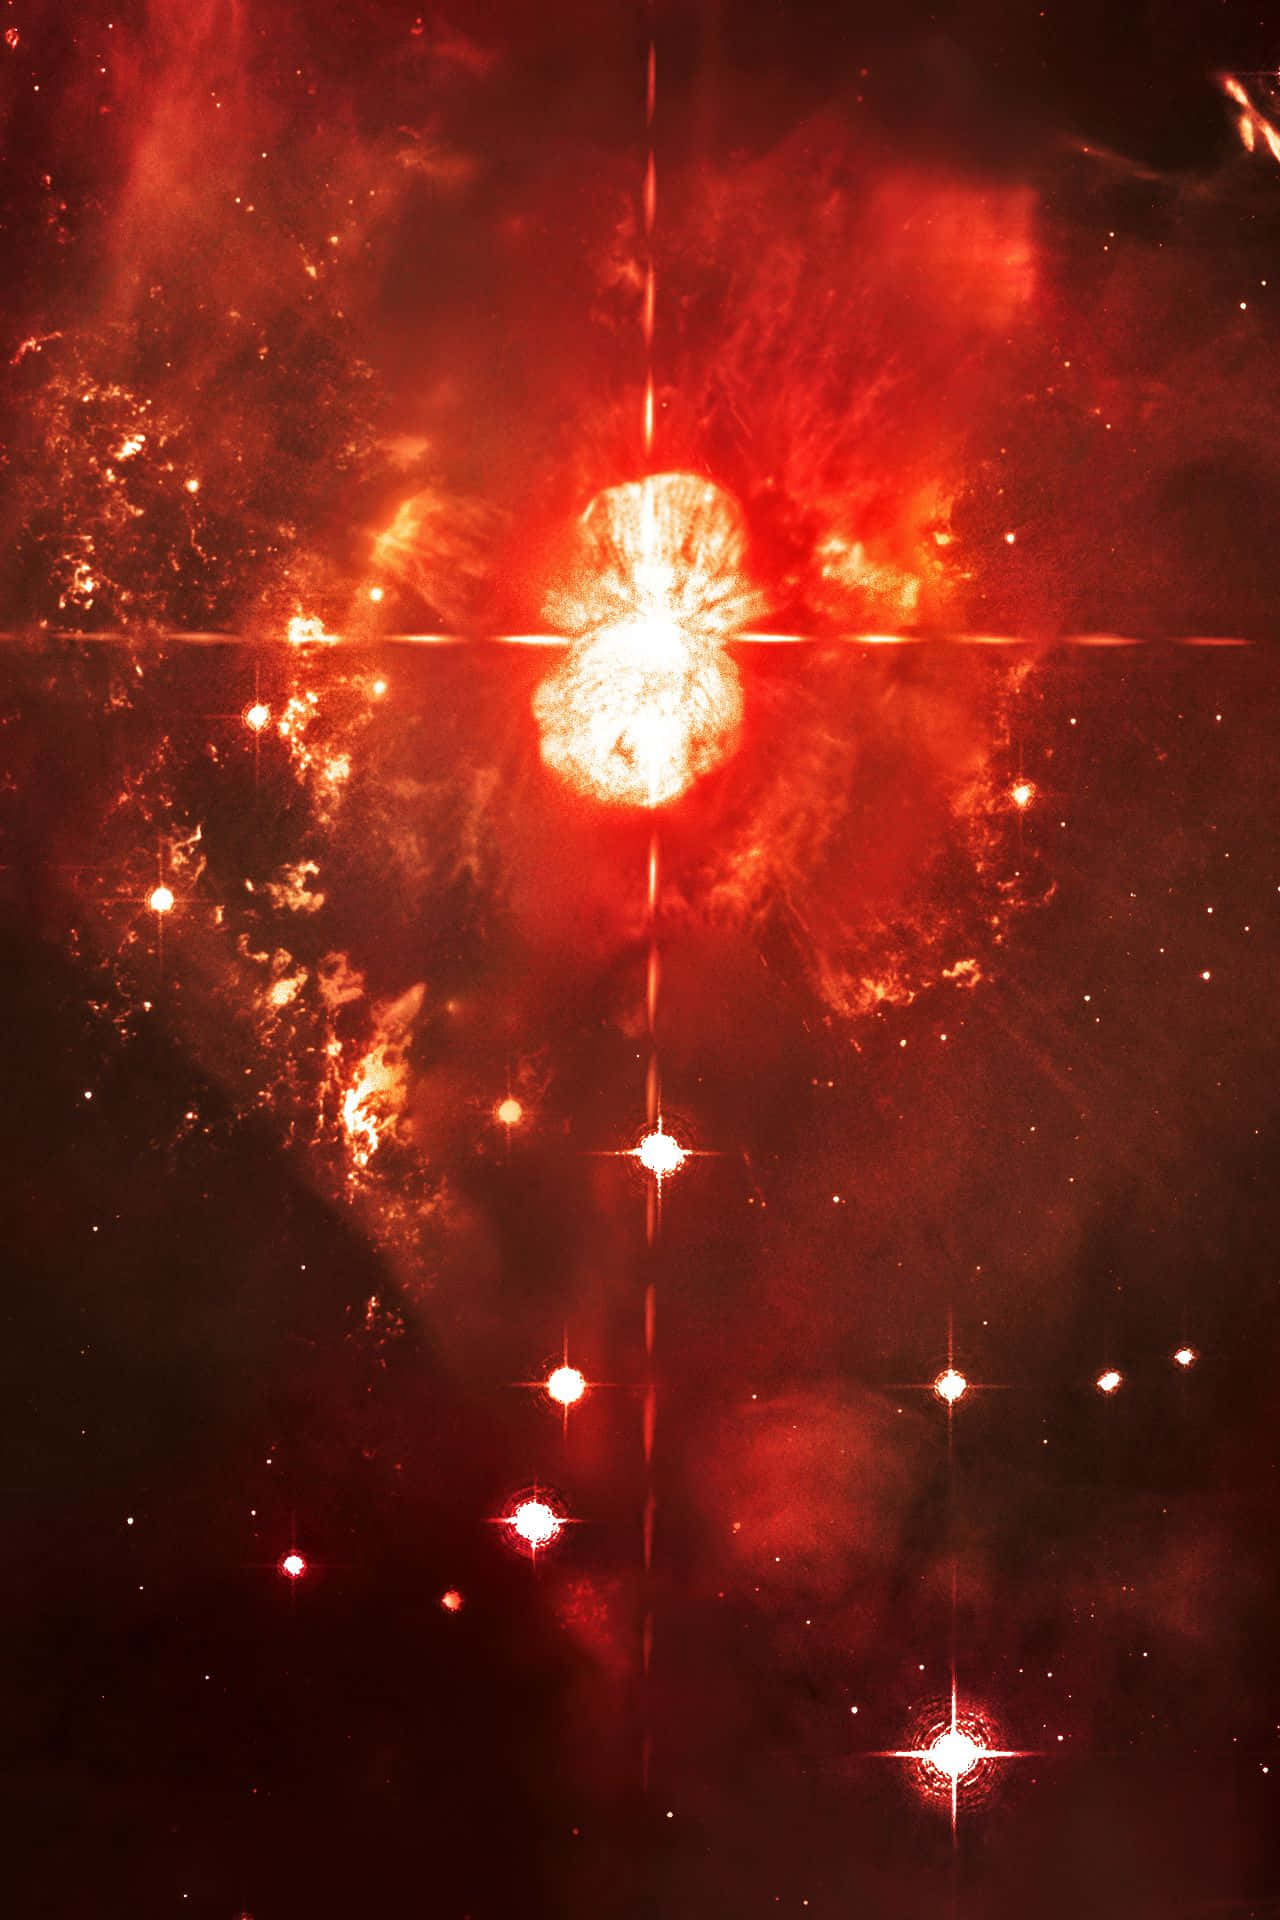 Stunning Quasar In Galaxy Background